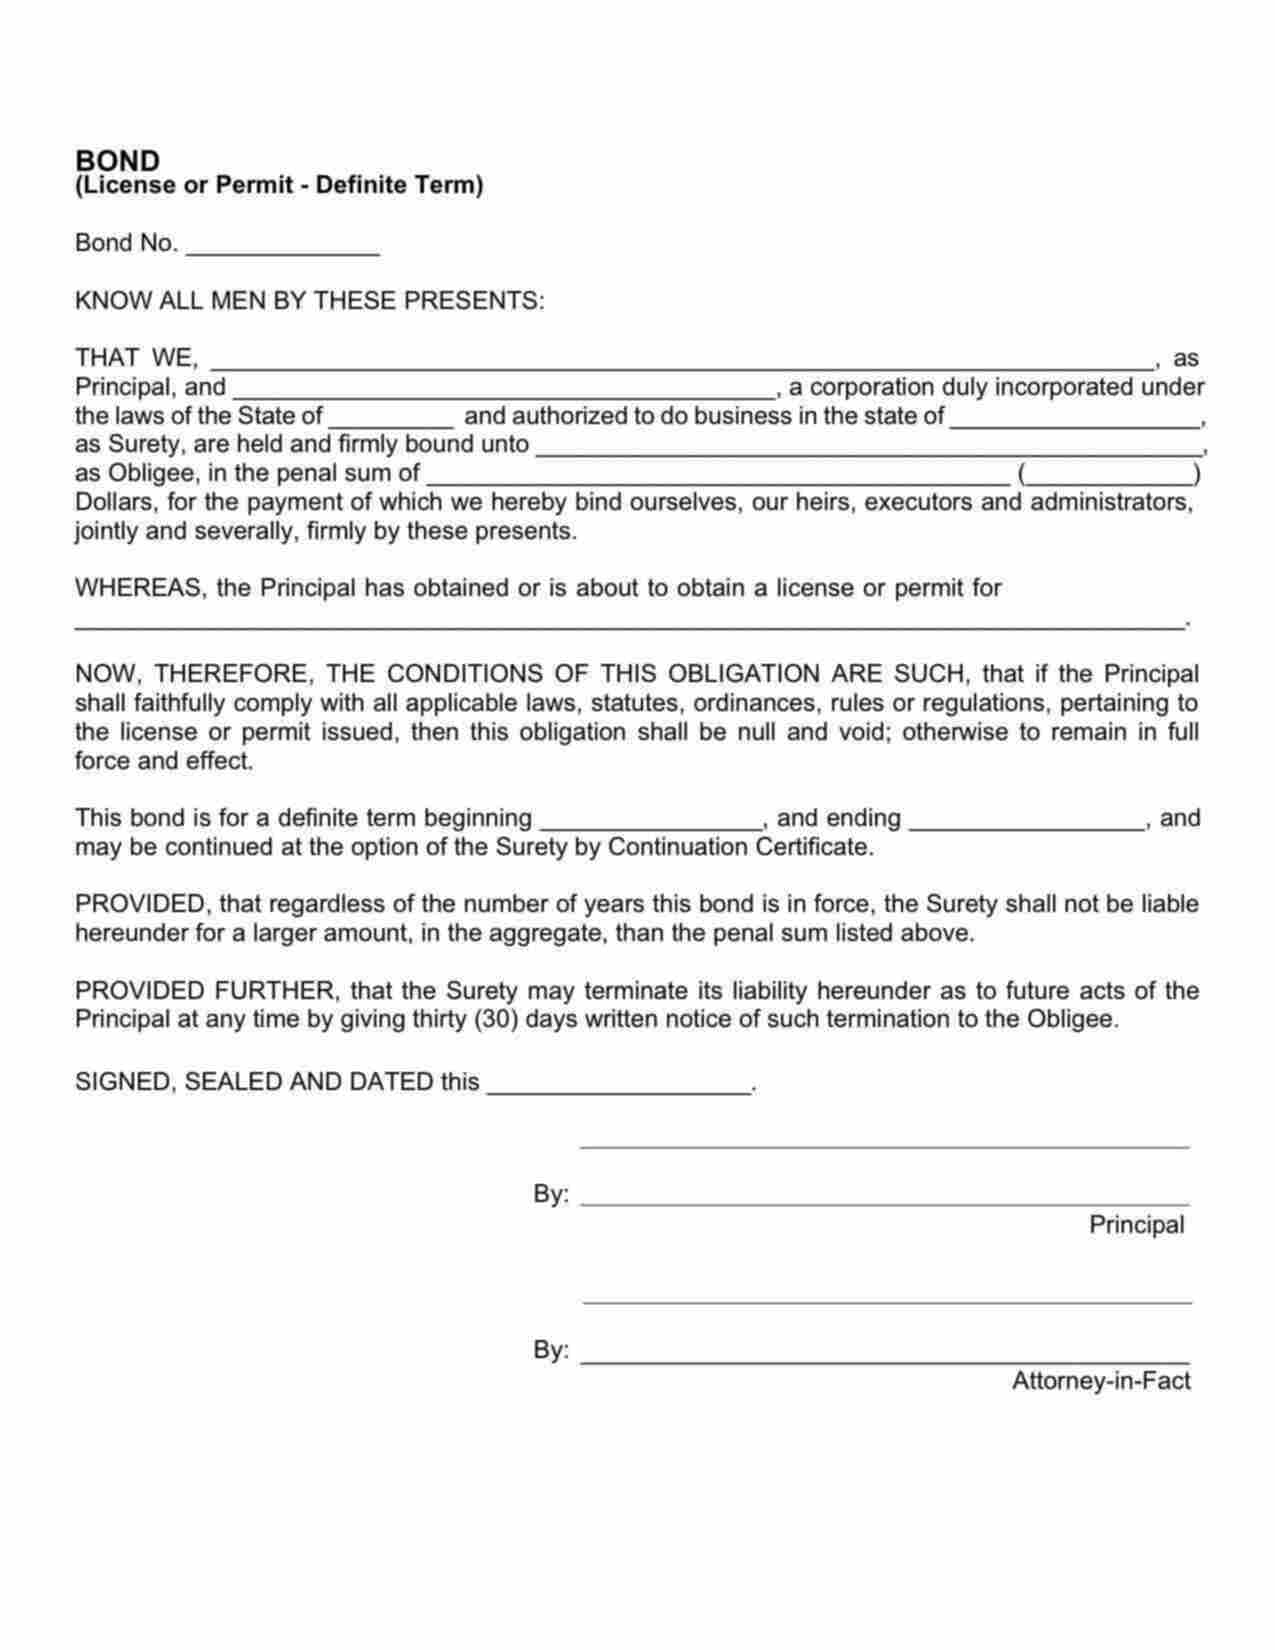 Indiana License/Permit Bond Form